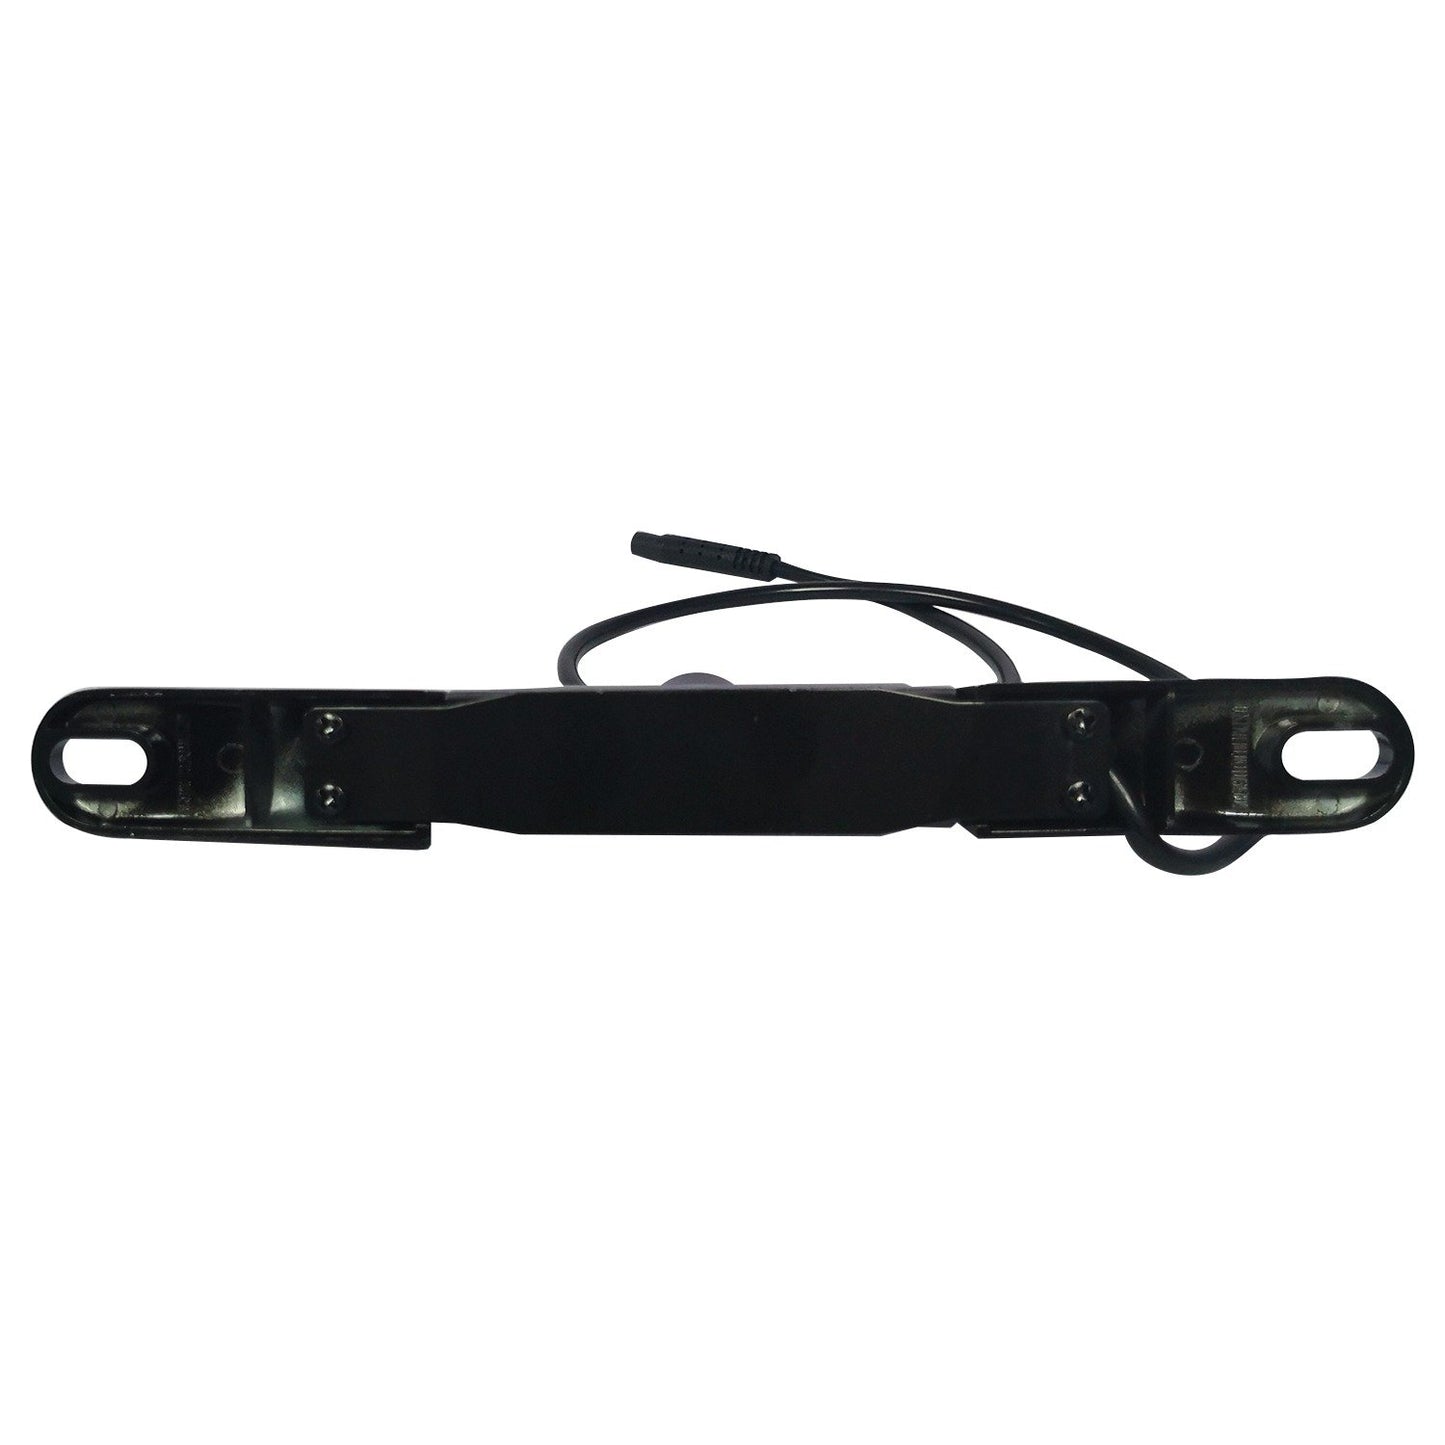 Boyo Vision VTL422CLS Bar-Type Short-Length 170° License Plate Camera with LEDs